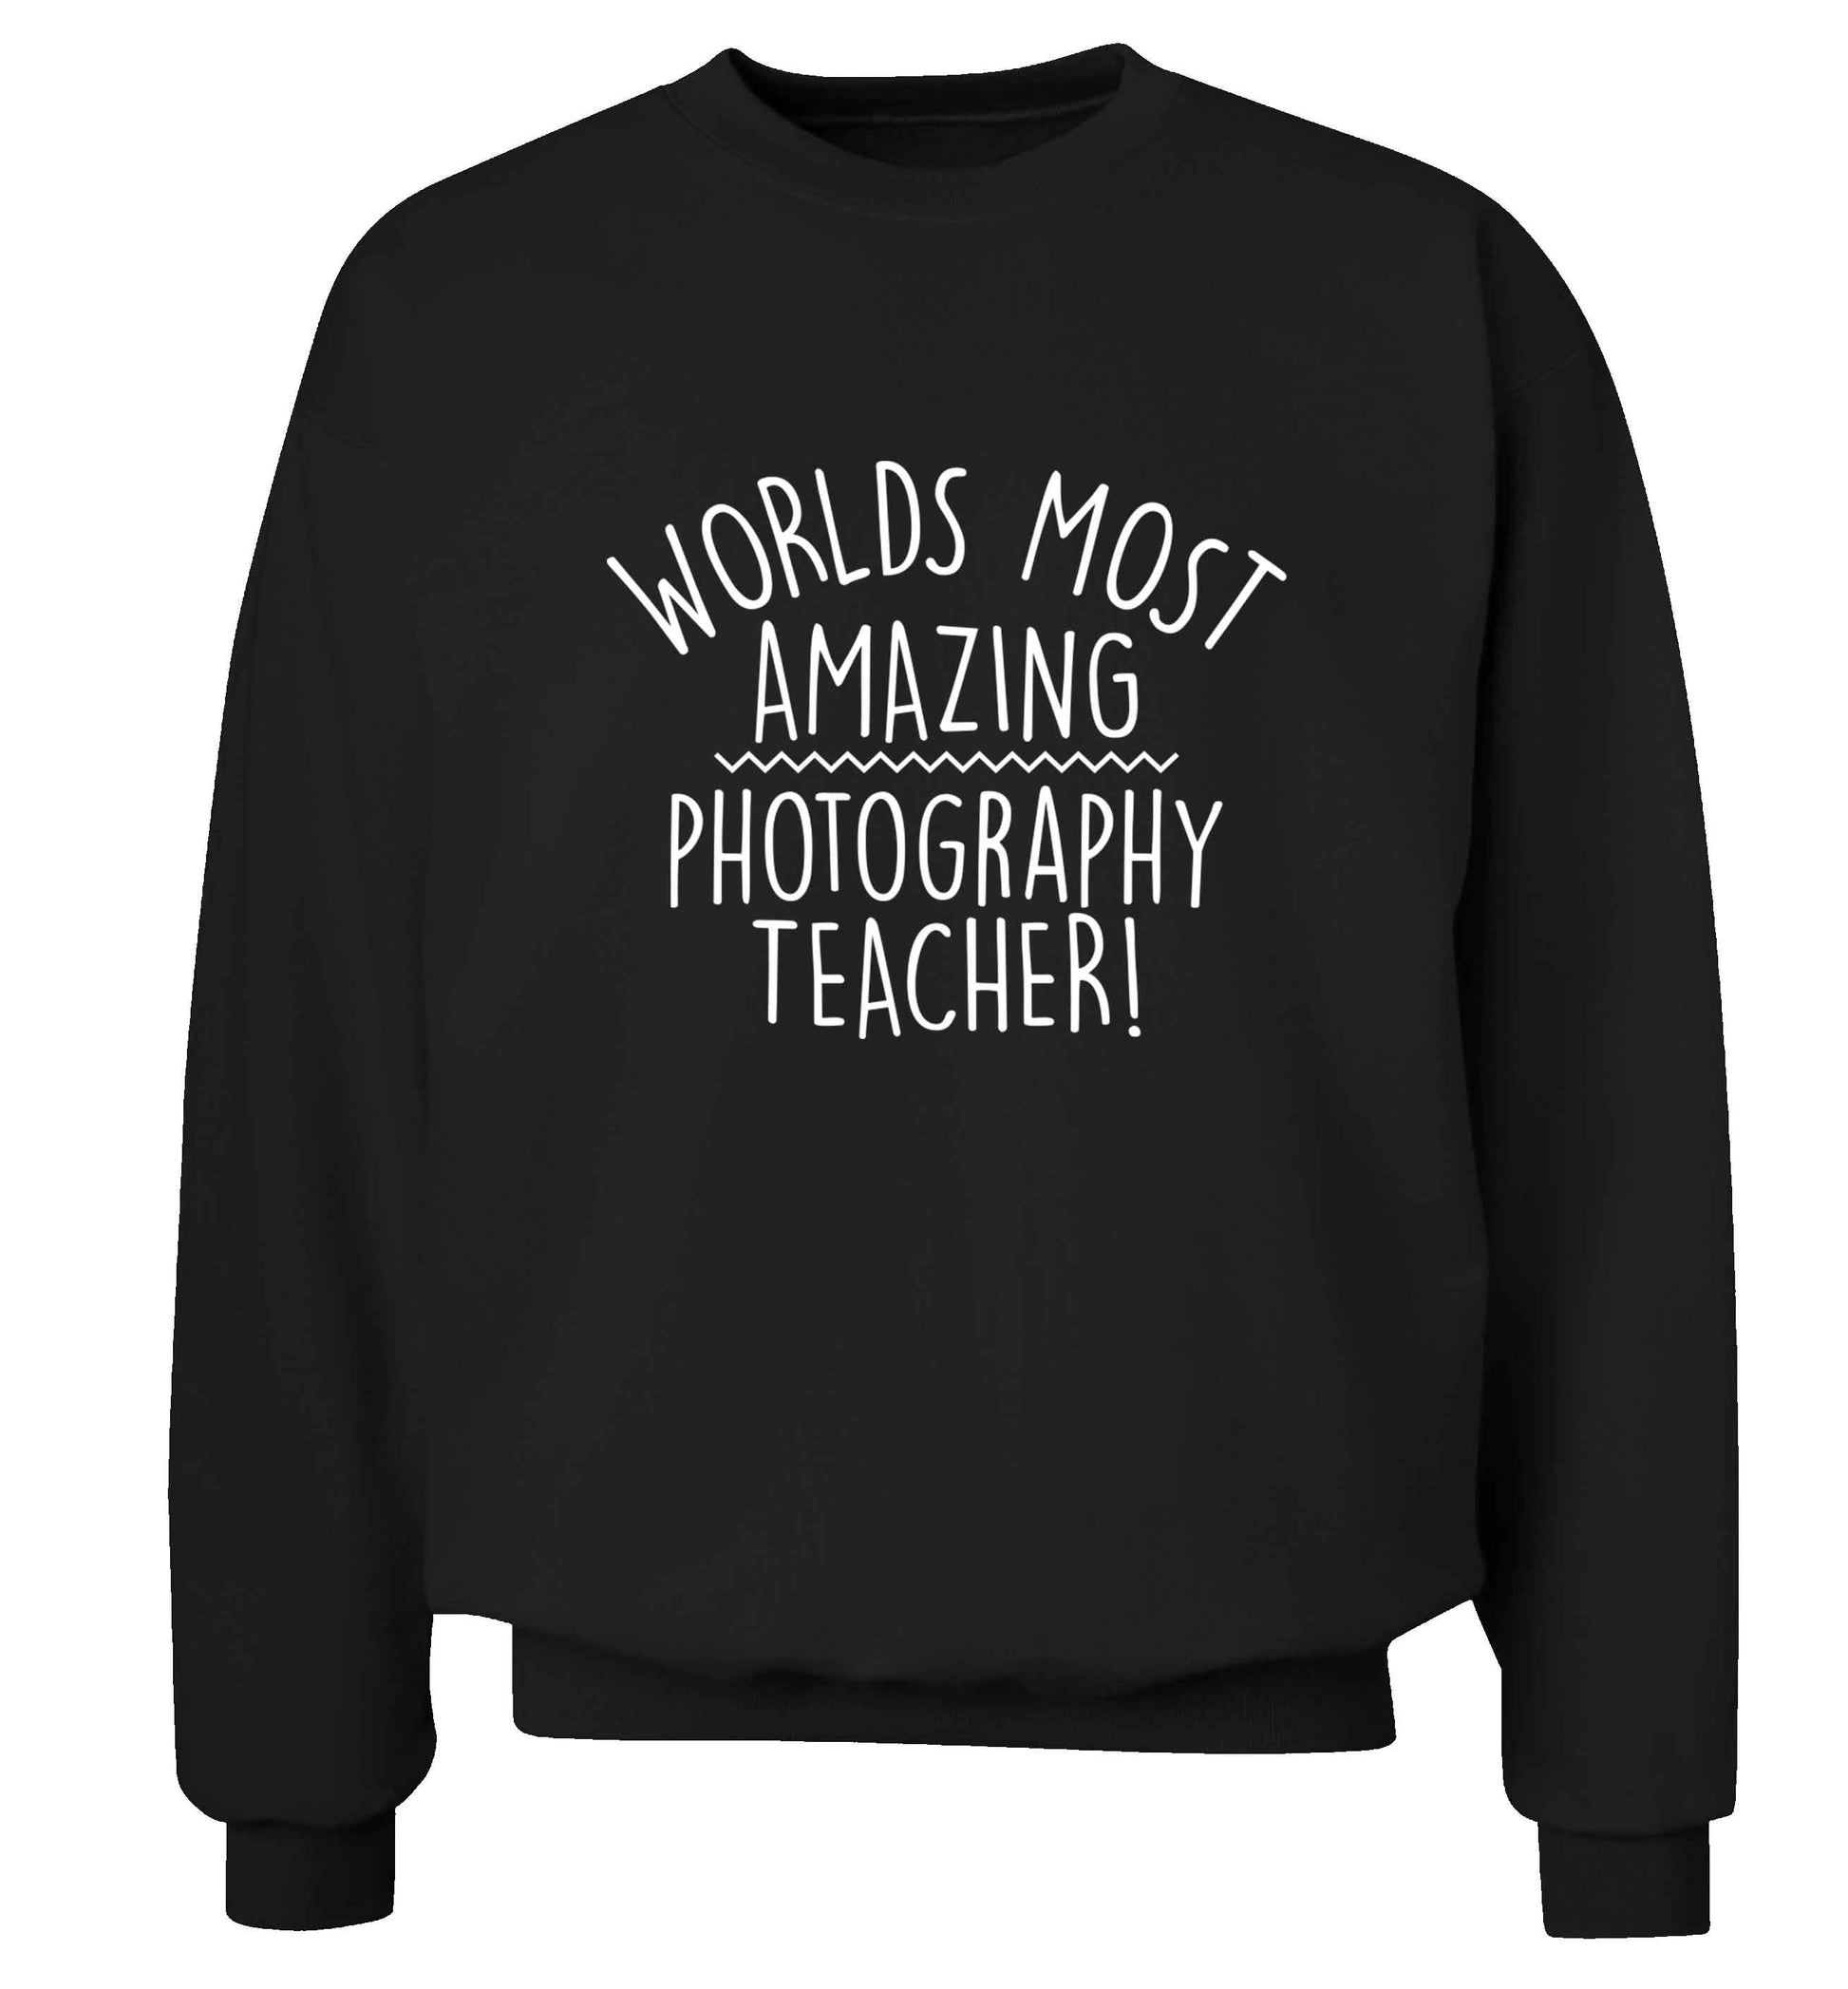 Worlds most amazing photography teacher adult's unisex black sweater 2XL